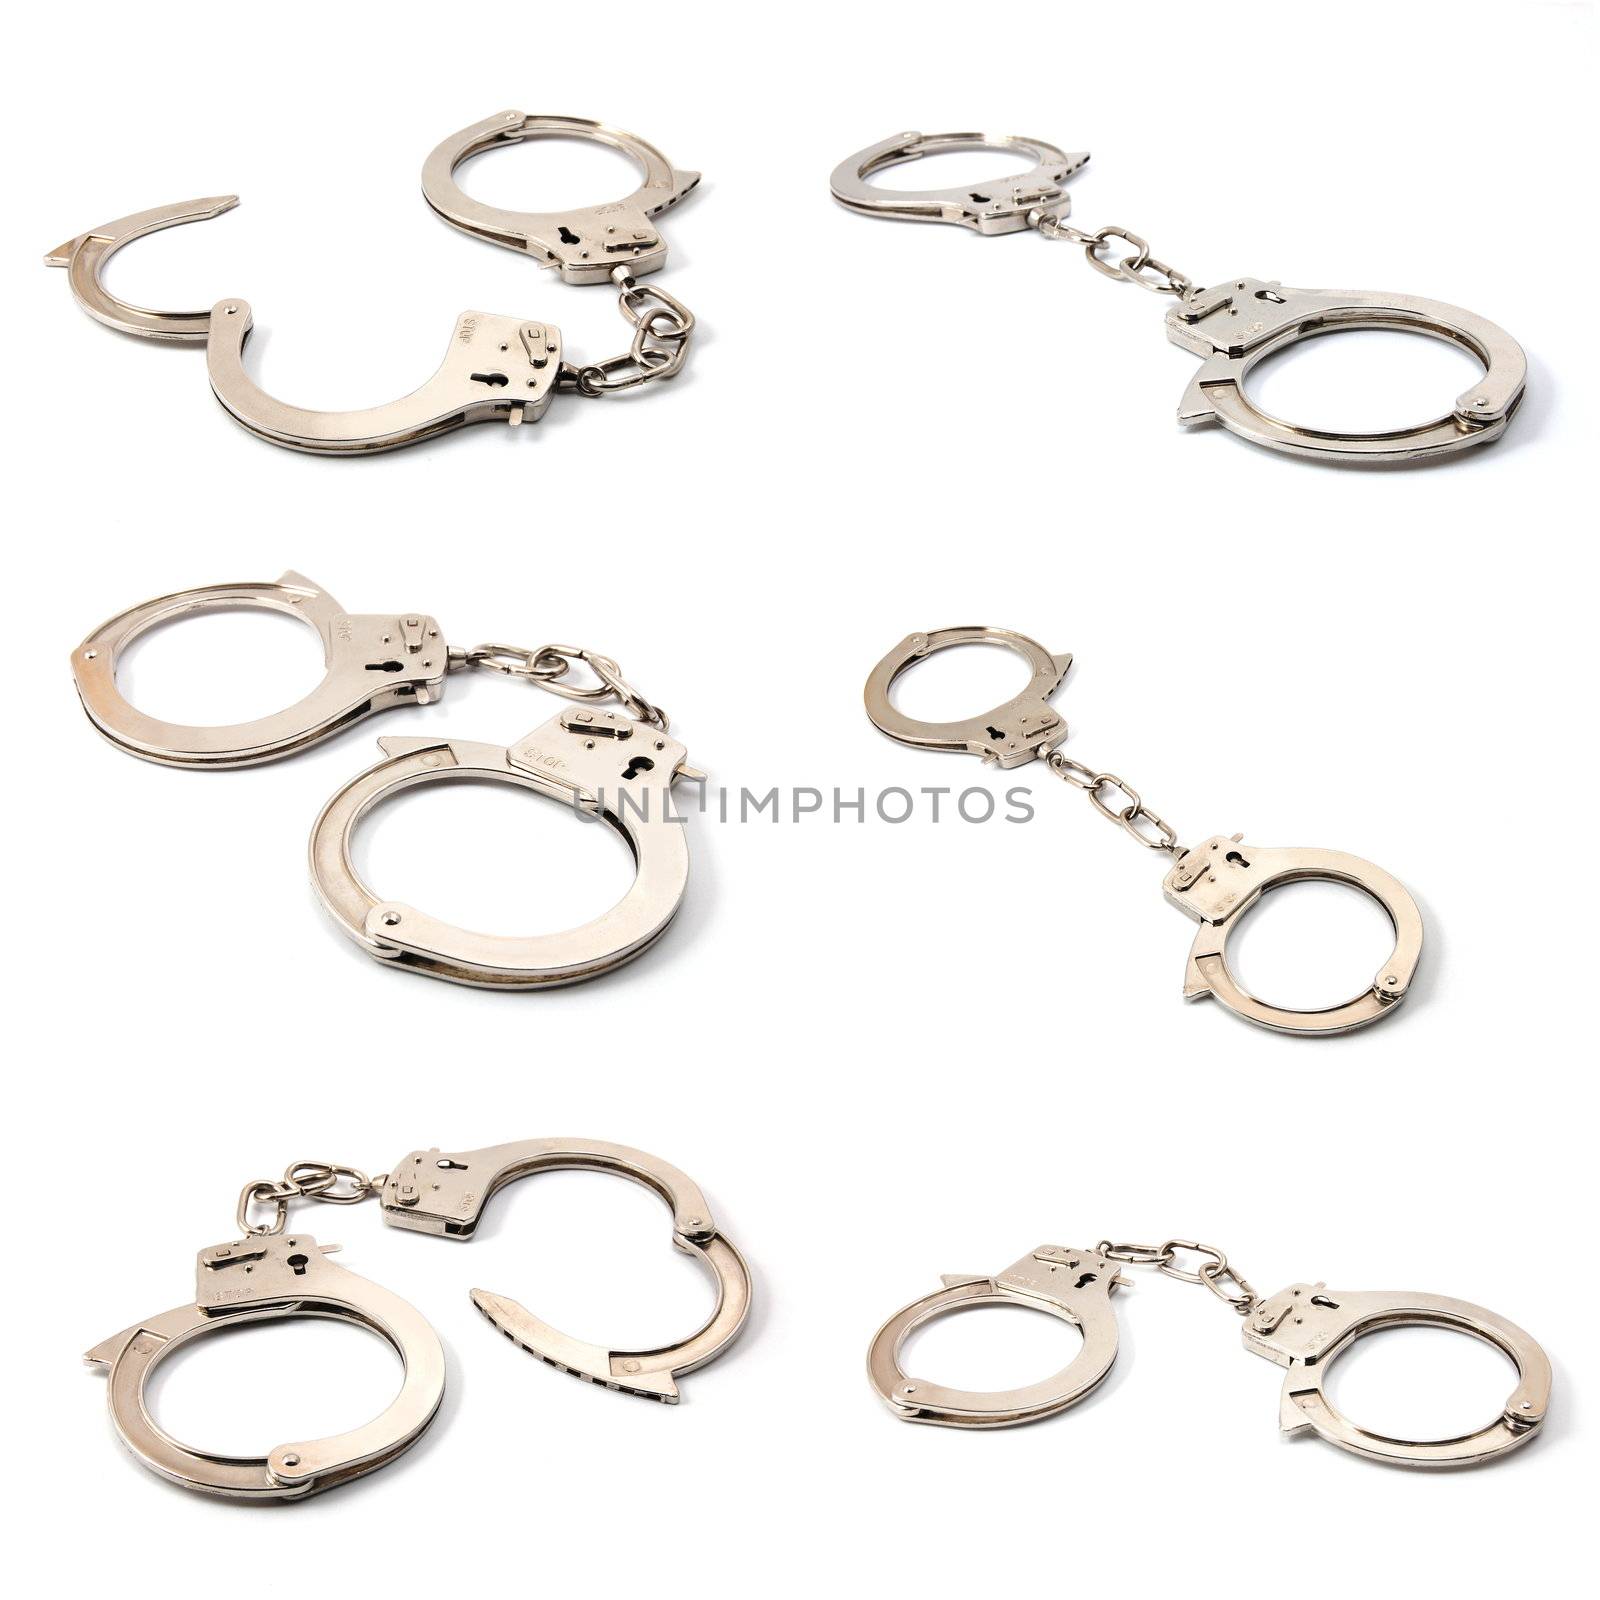 handcuffs collection by gunnar3000